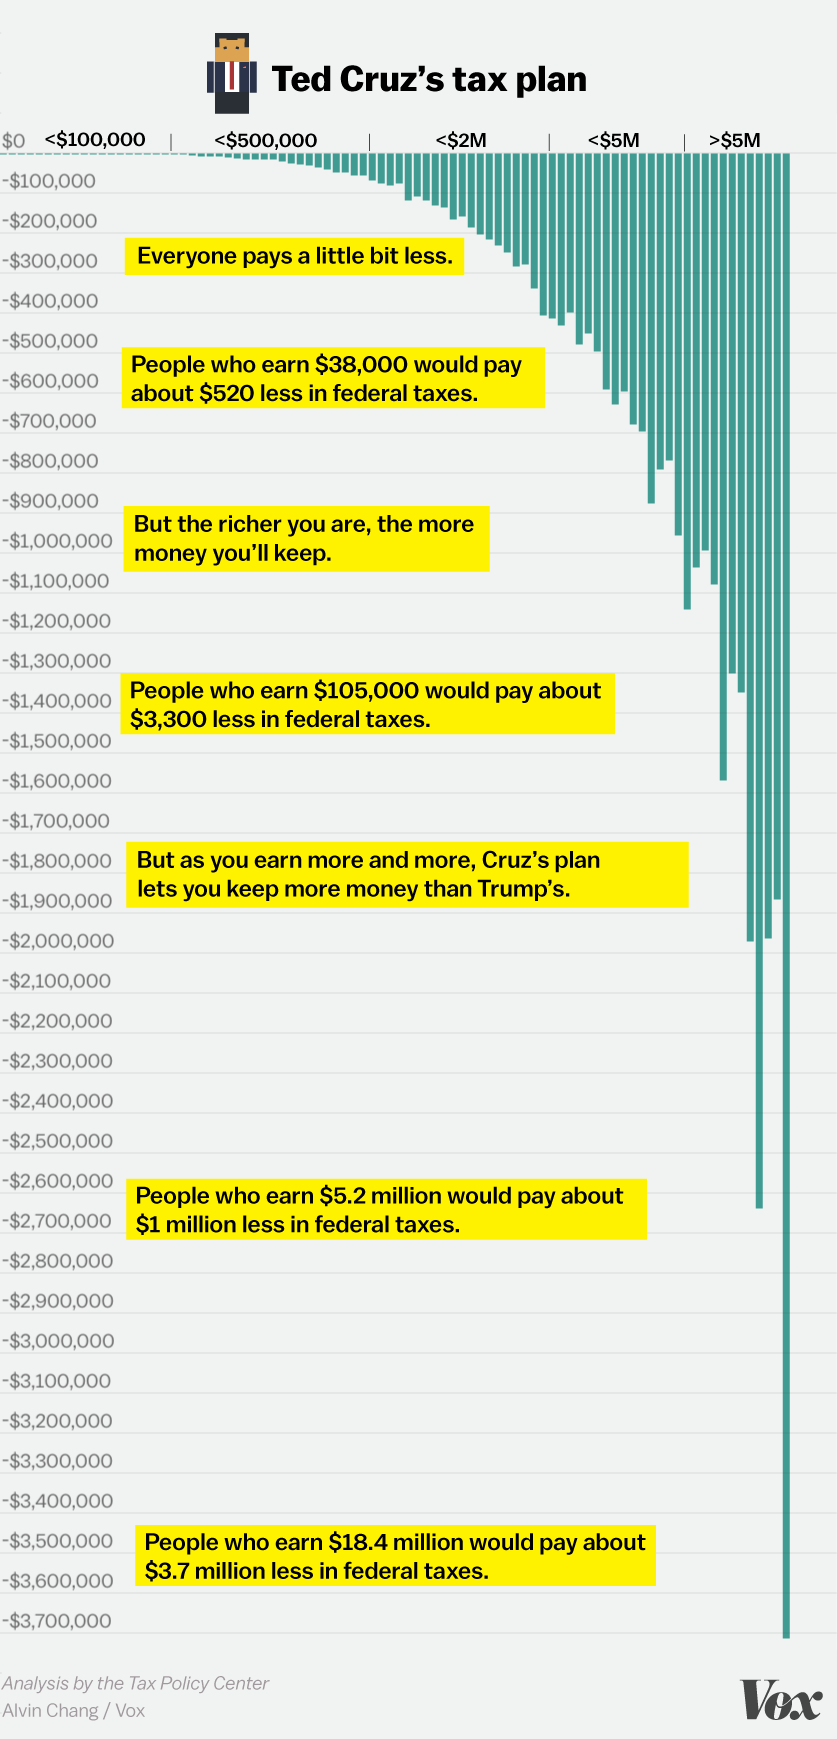 Ted Cruz's tax plan